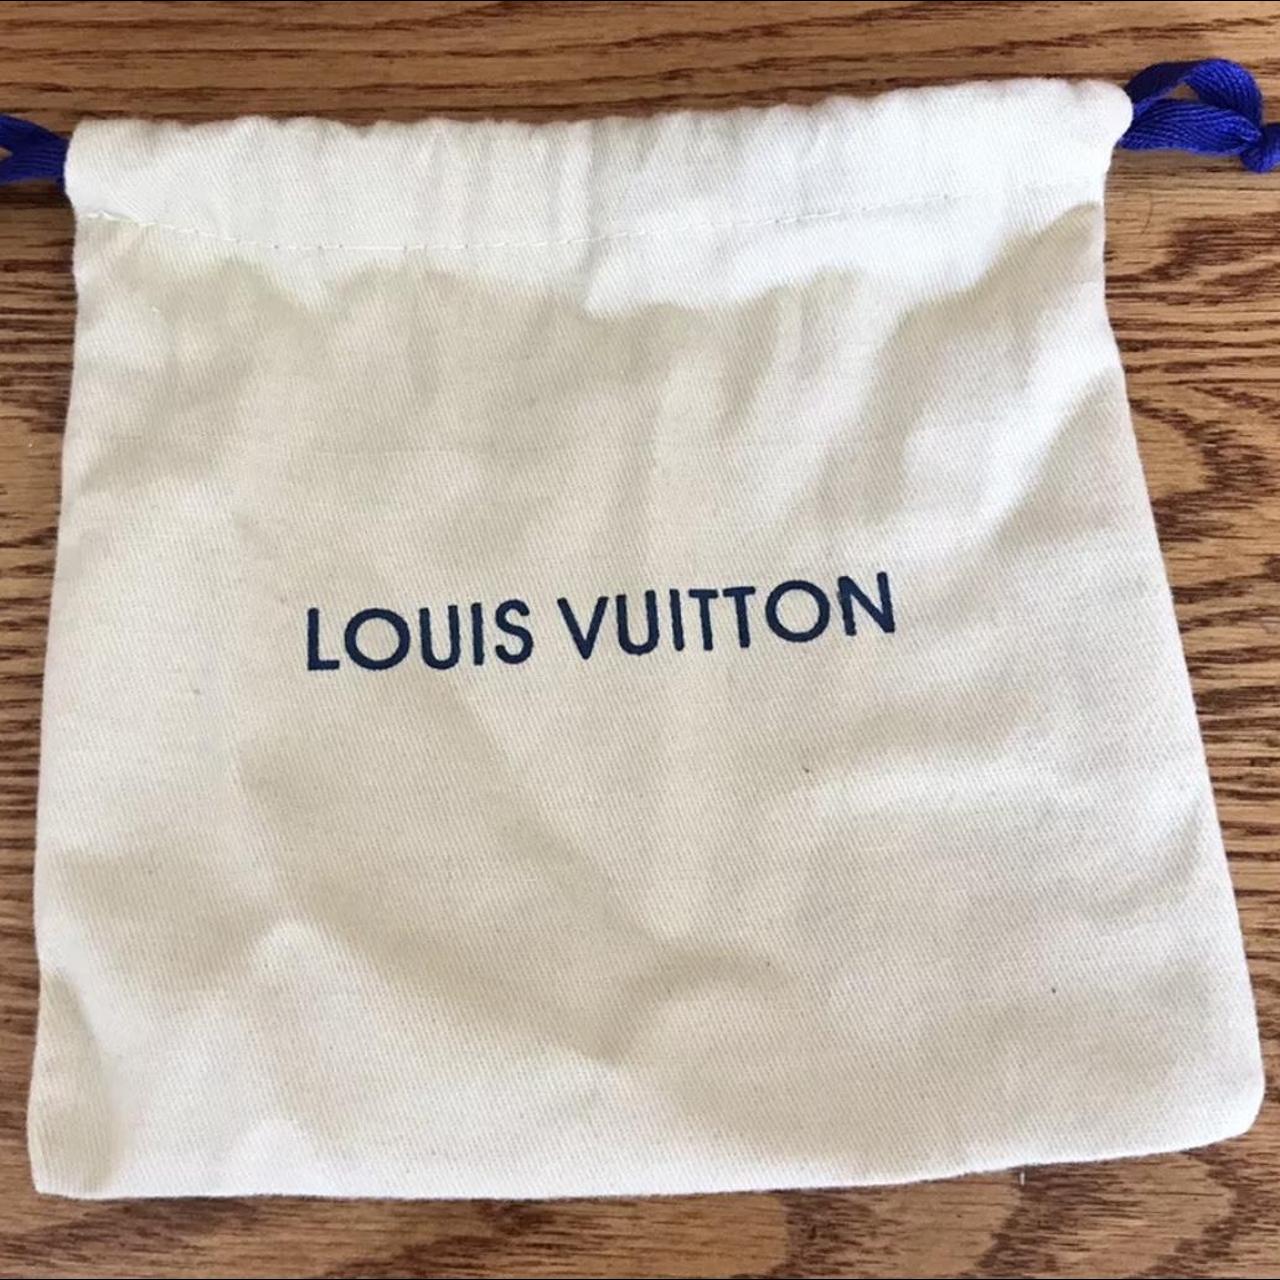 Louis Vuitton - Damier Belt - Brown - M9807 - Size 90/36 for Sale in